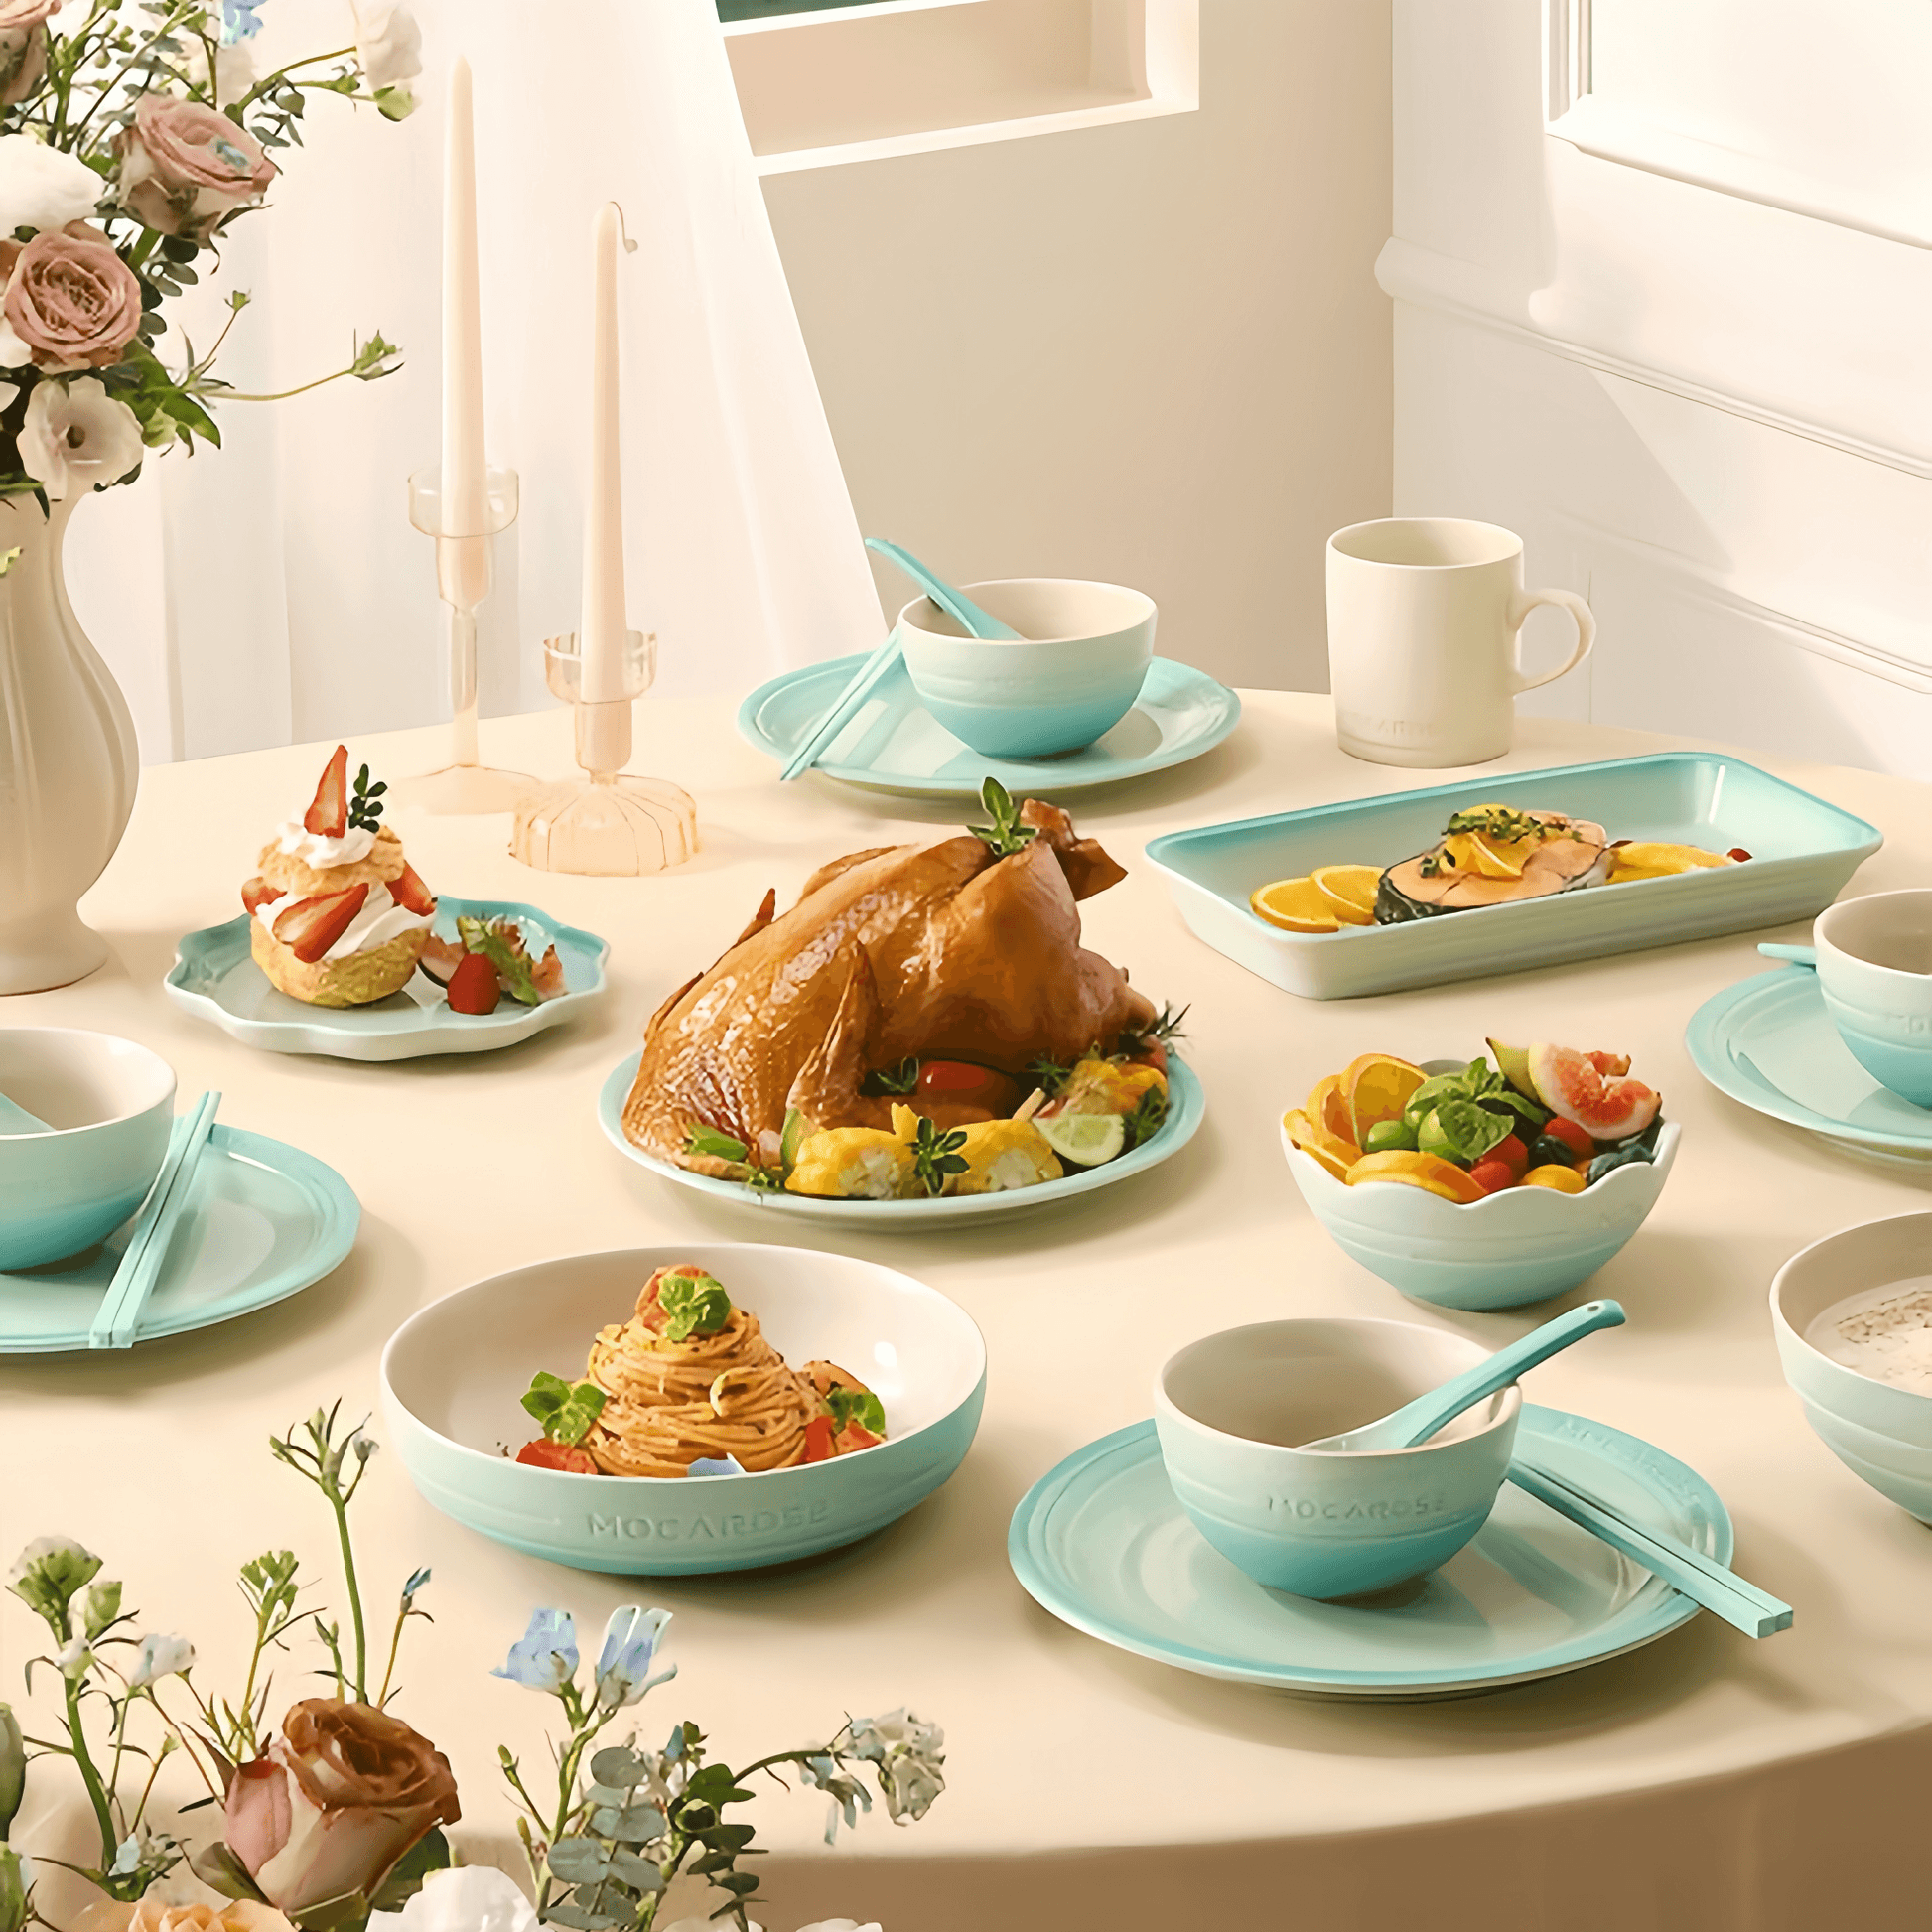 Mocarose elegant tableware set on dining table